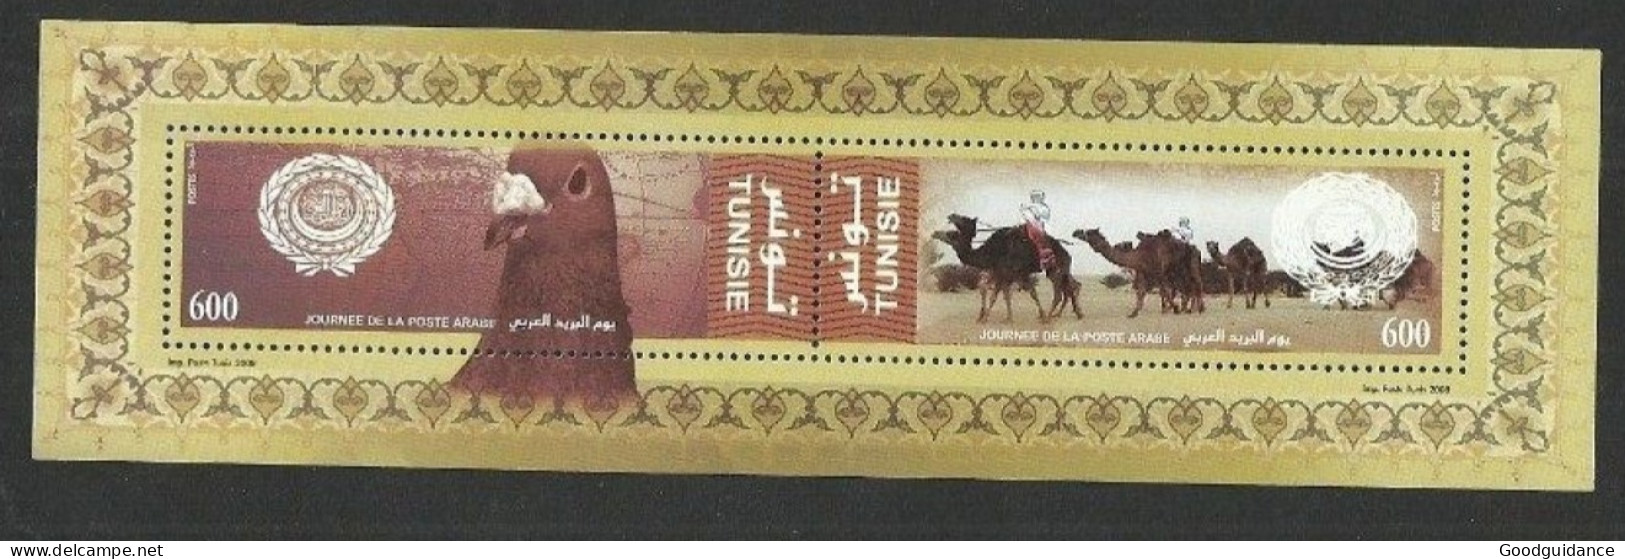 2008- Tunisia-  Minisheet  - Arab Post Day 2008 - Bird - Camel - Desert - MNH** - Gezamelijke Uitgaven